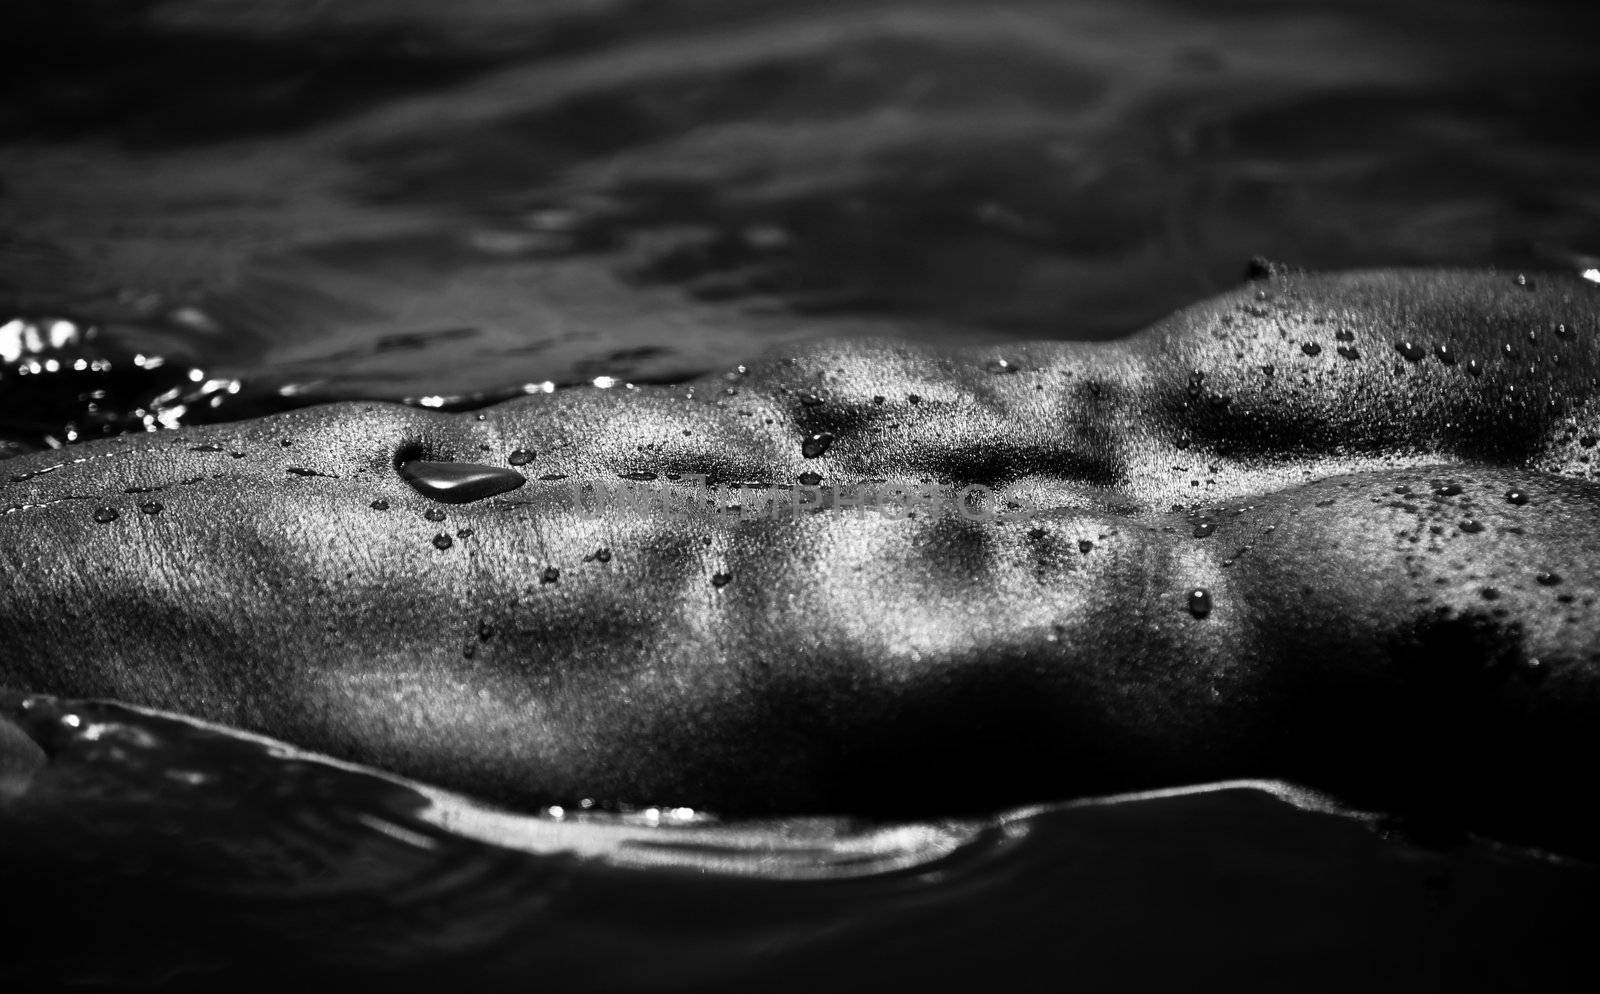 Closeup Monotone  Photo Of A Muscular Male Abdomen And Pecs Shining On Water